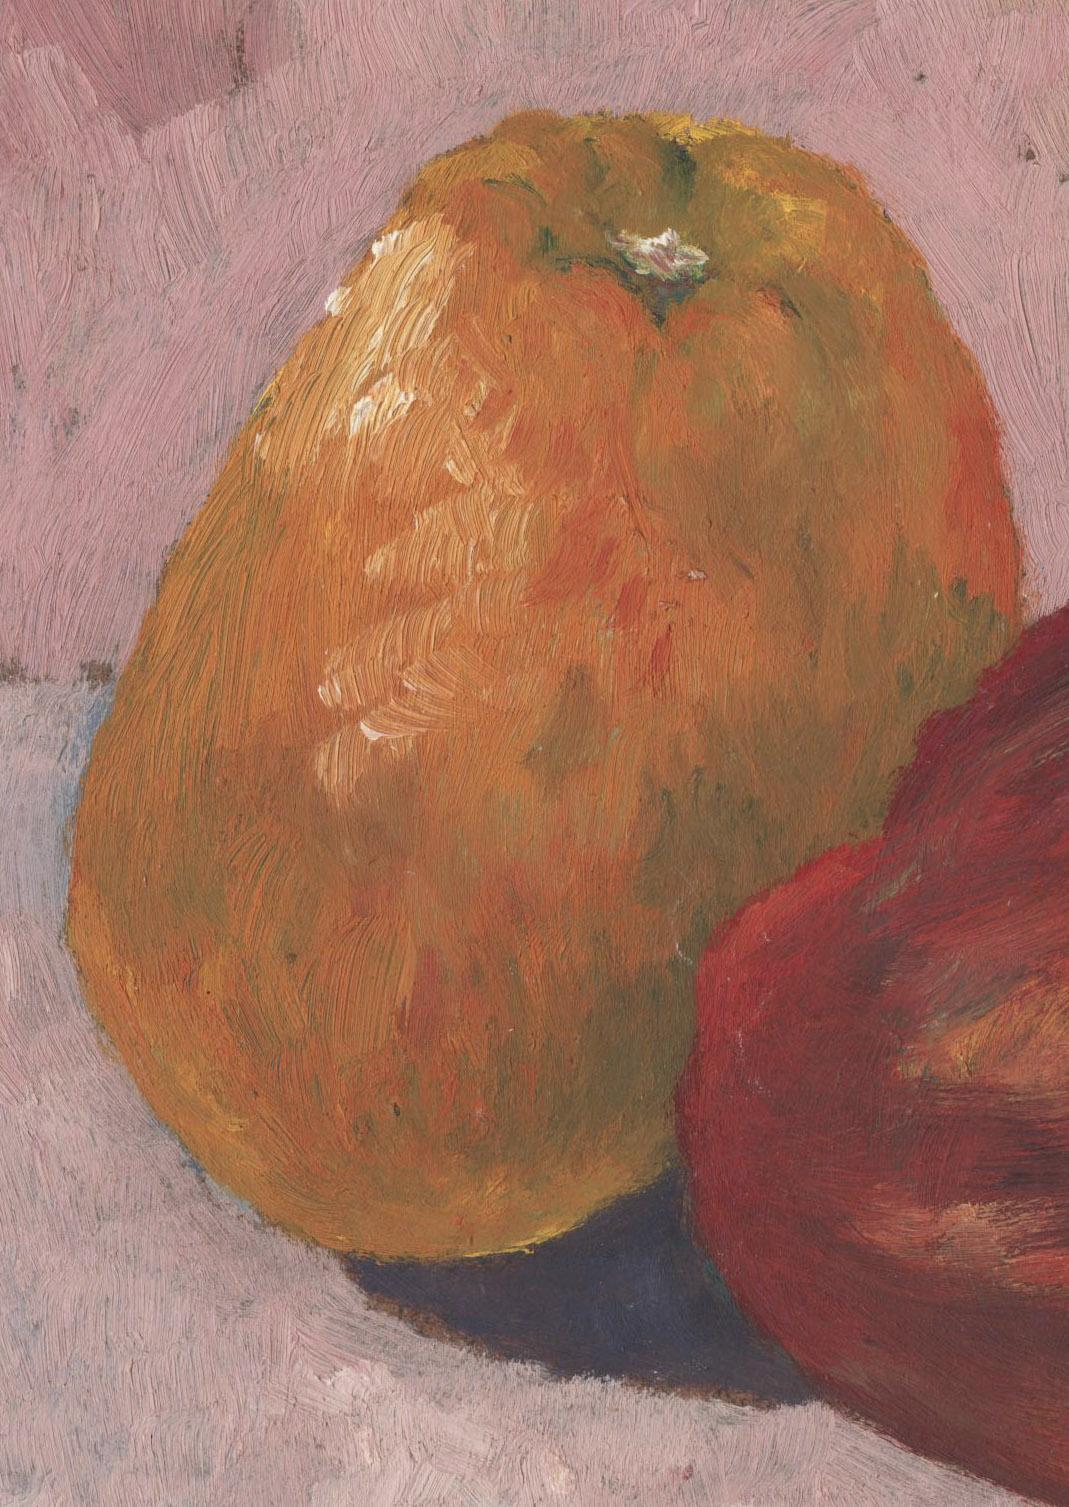 Les Fruits 2 - Painting by Charles Harris AKA Beni Kosh